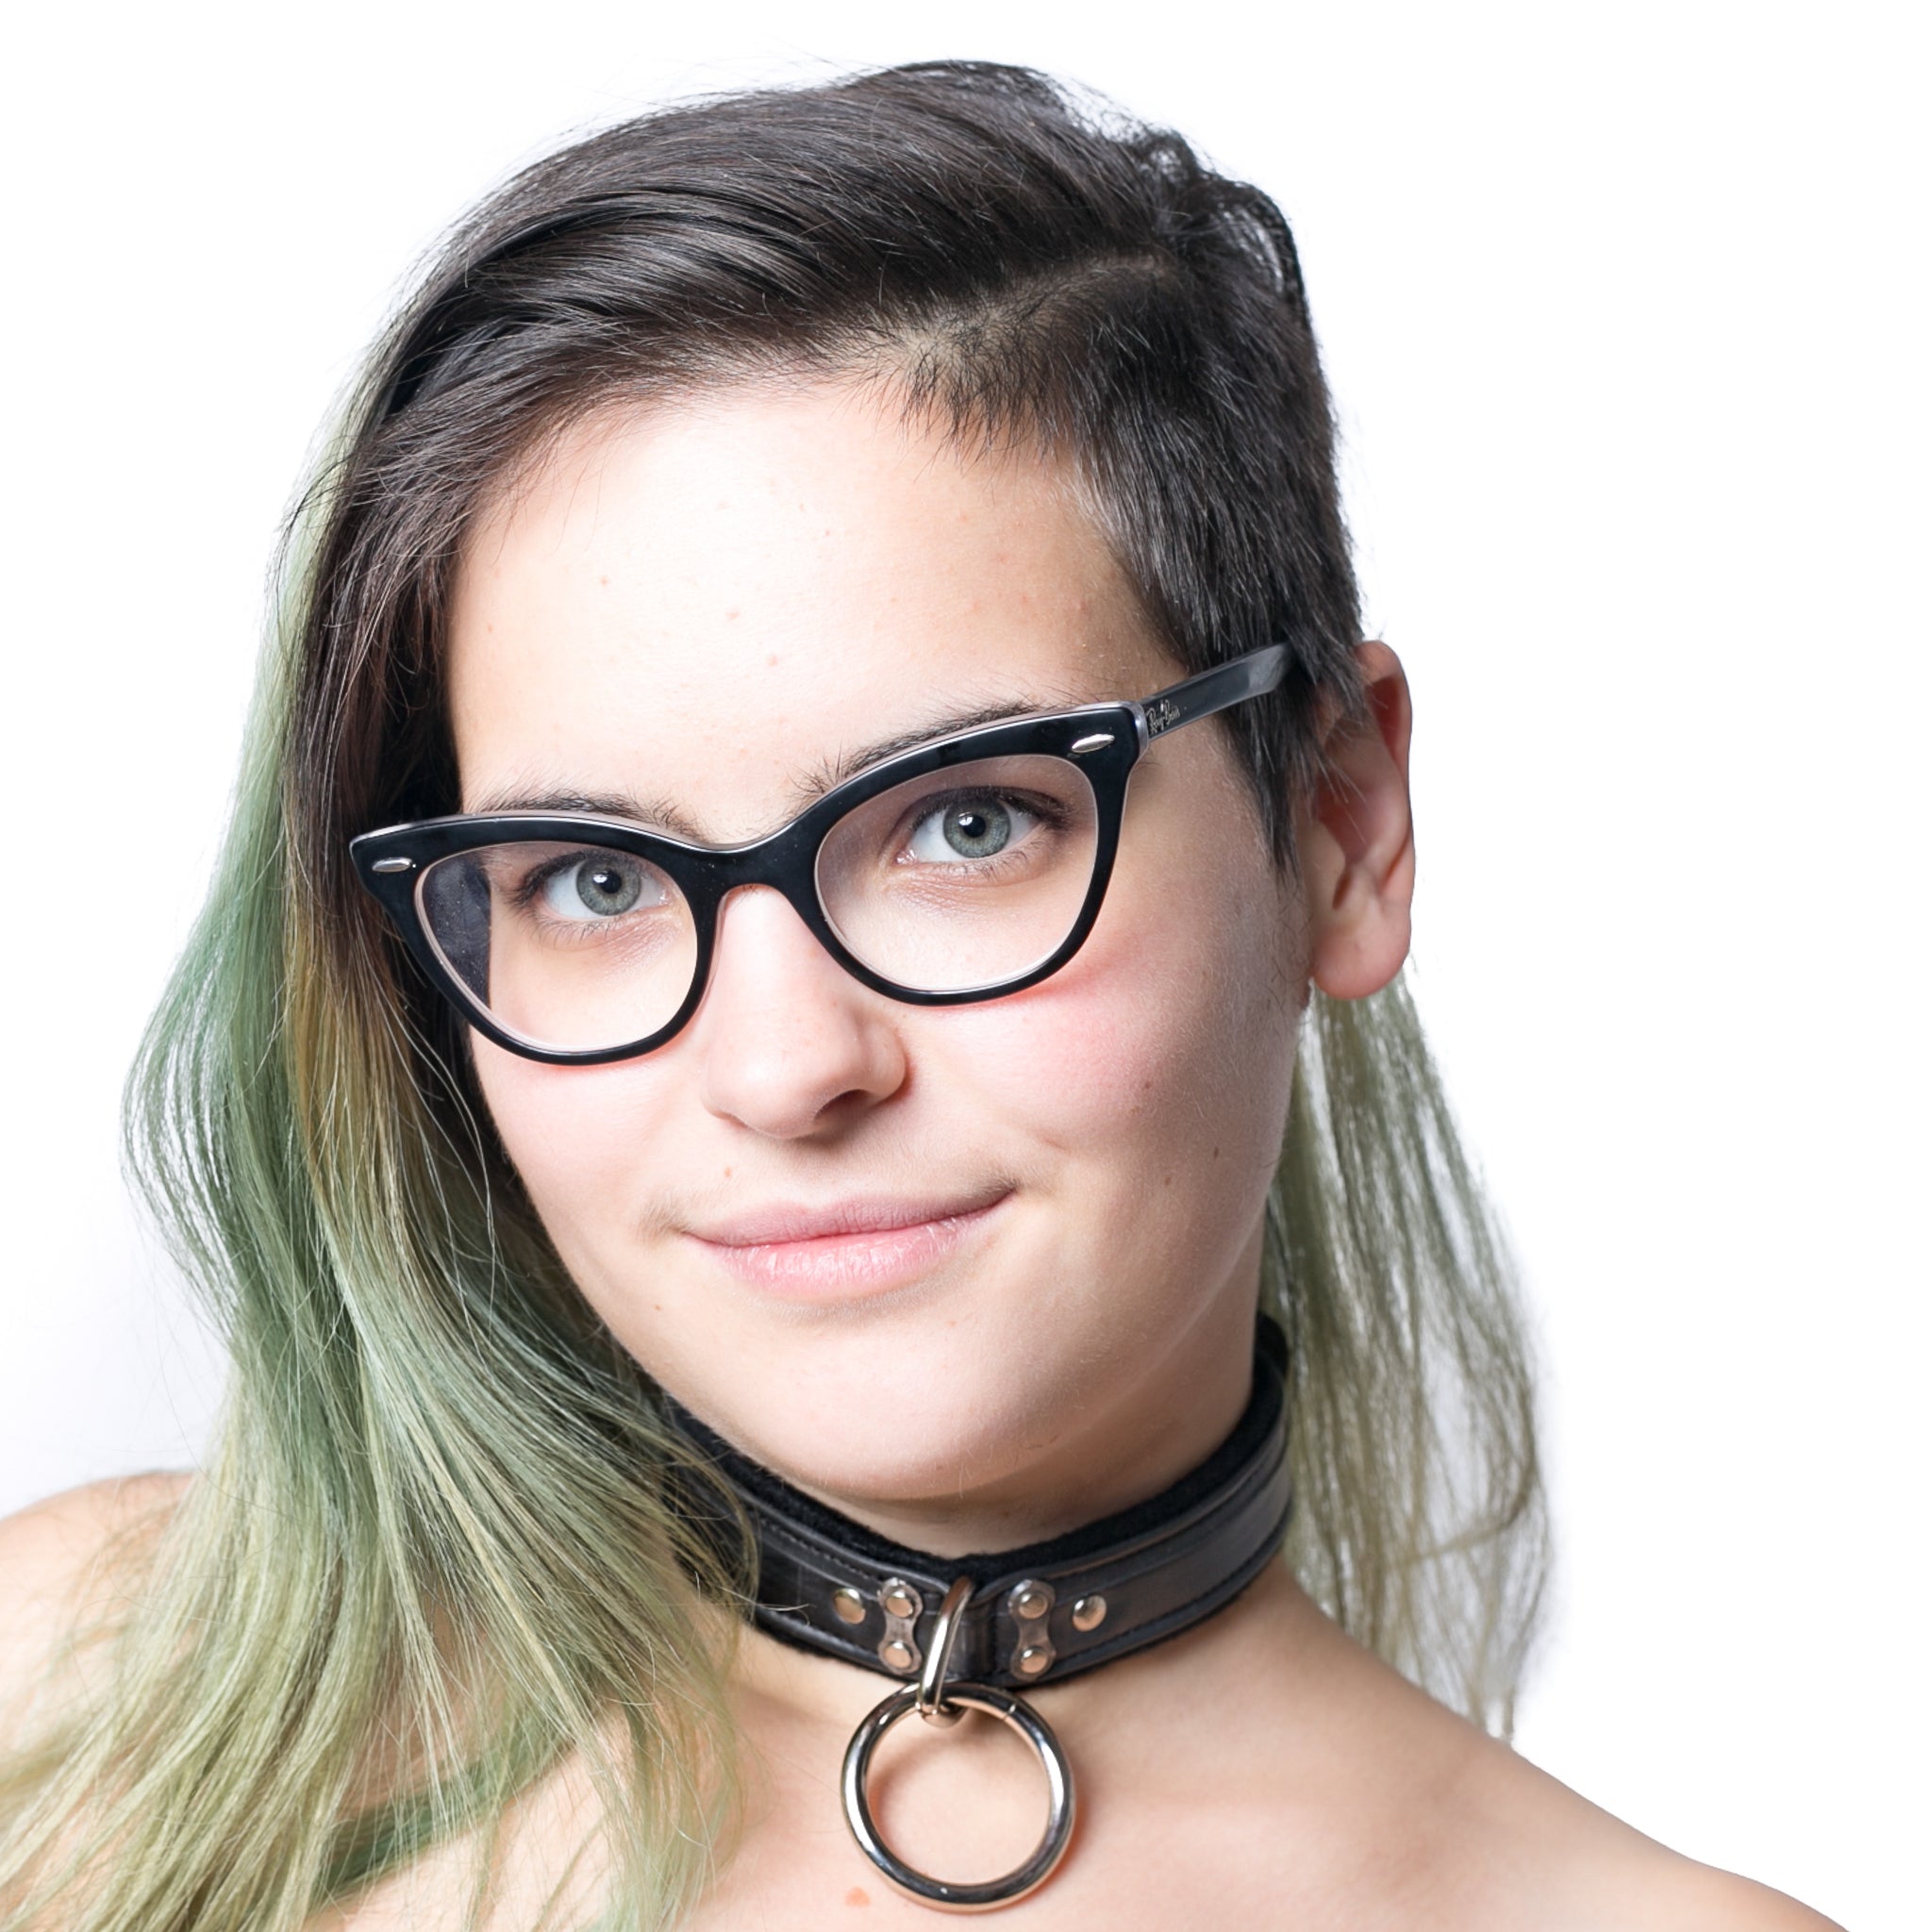 Women With Glasses Porn - Enjoying Bondage Women With Glasses | BDSM Fetish